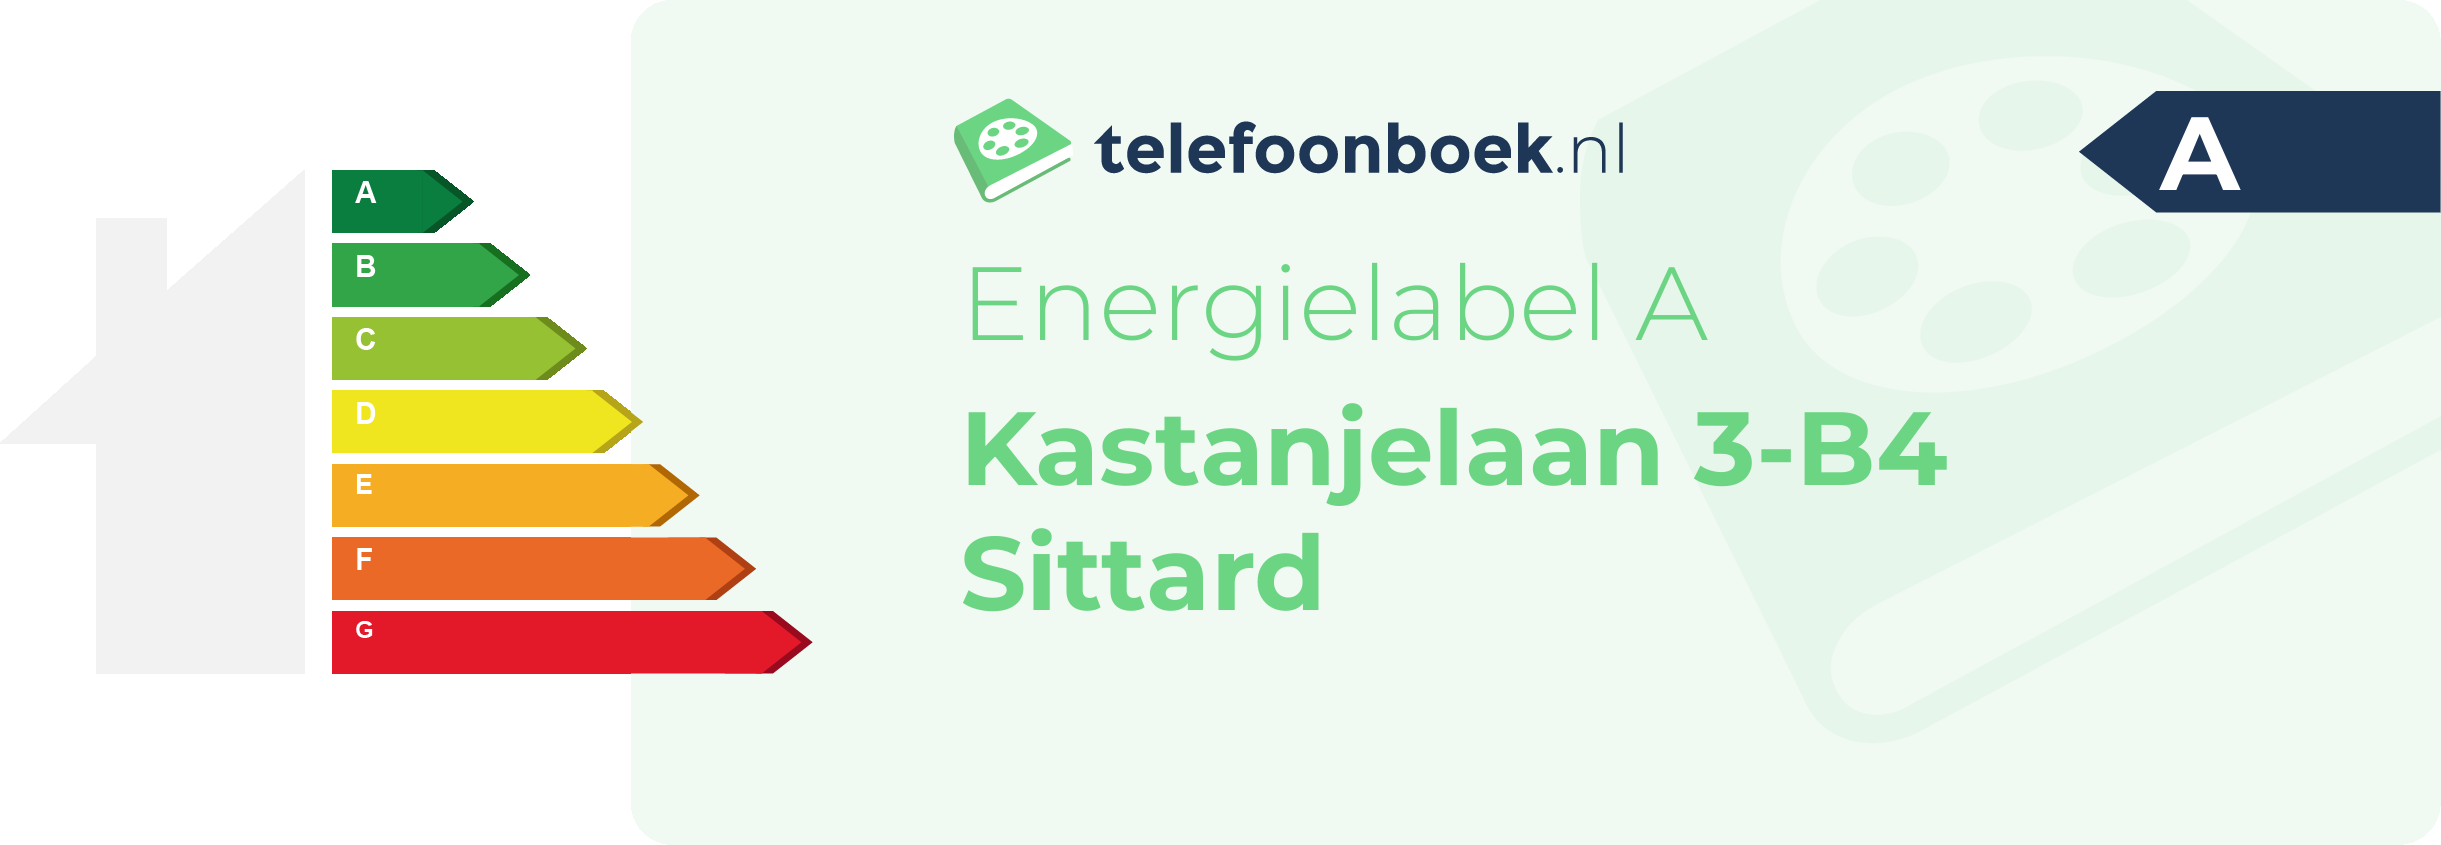 Energielabel Kastanjelaan 3-B4 Sittard